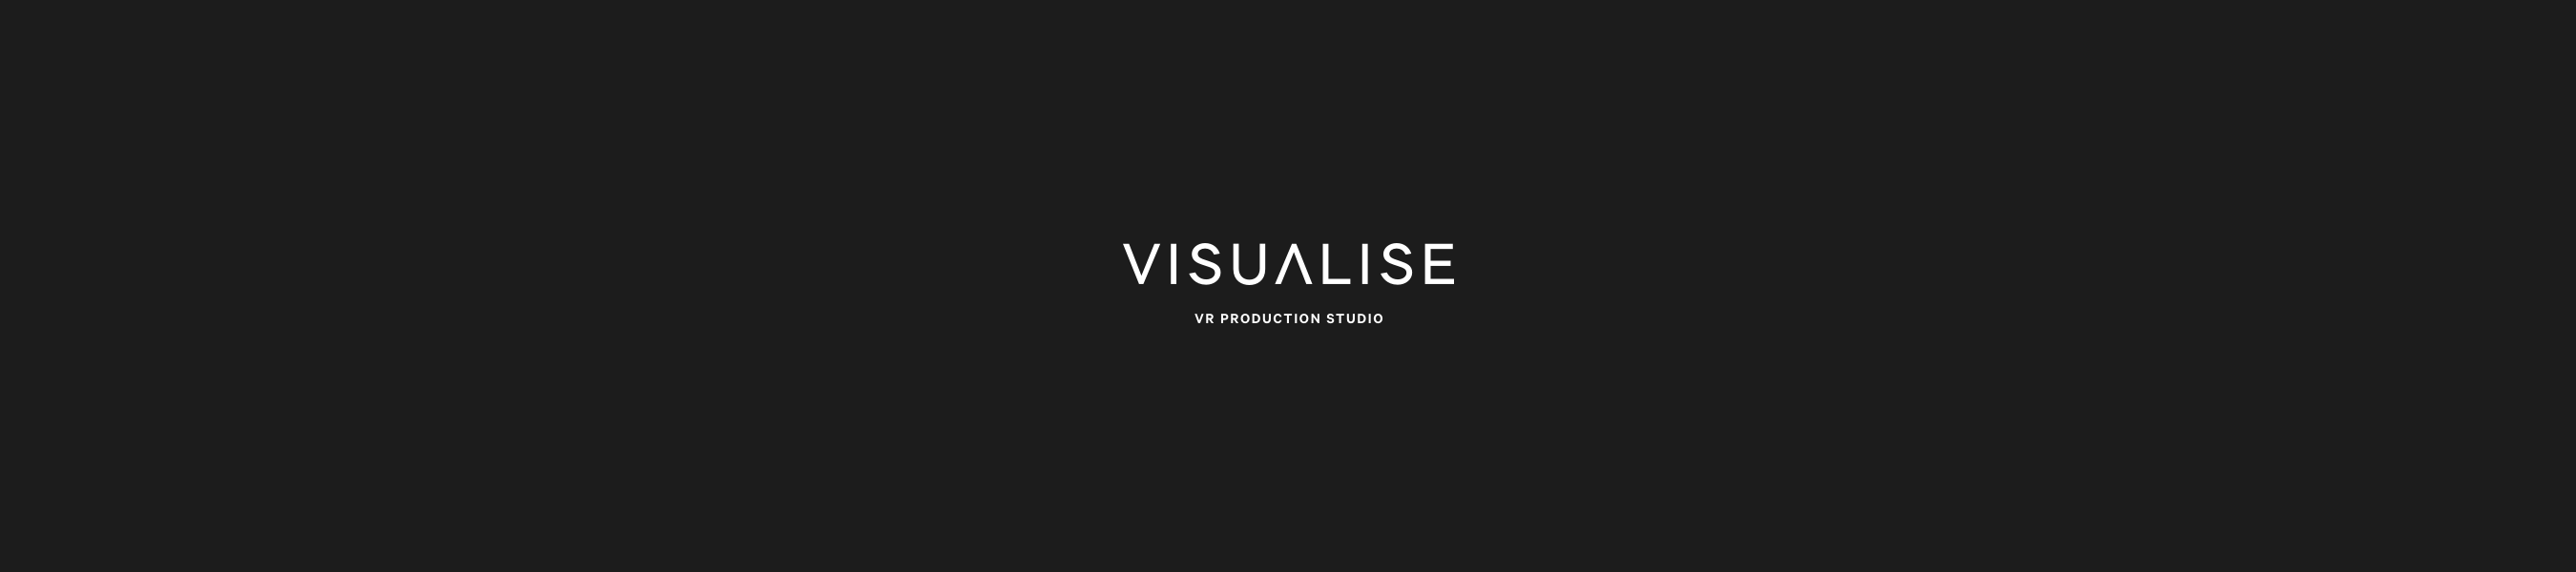 VR visualisation